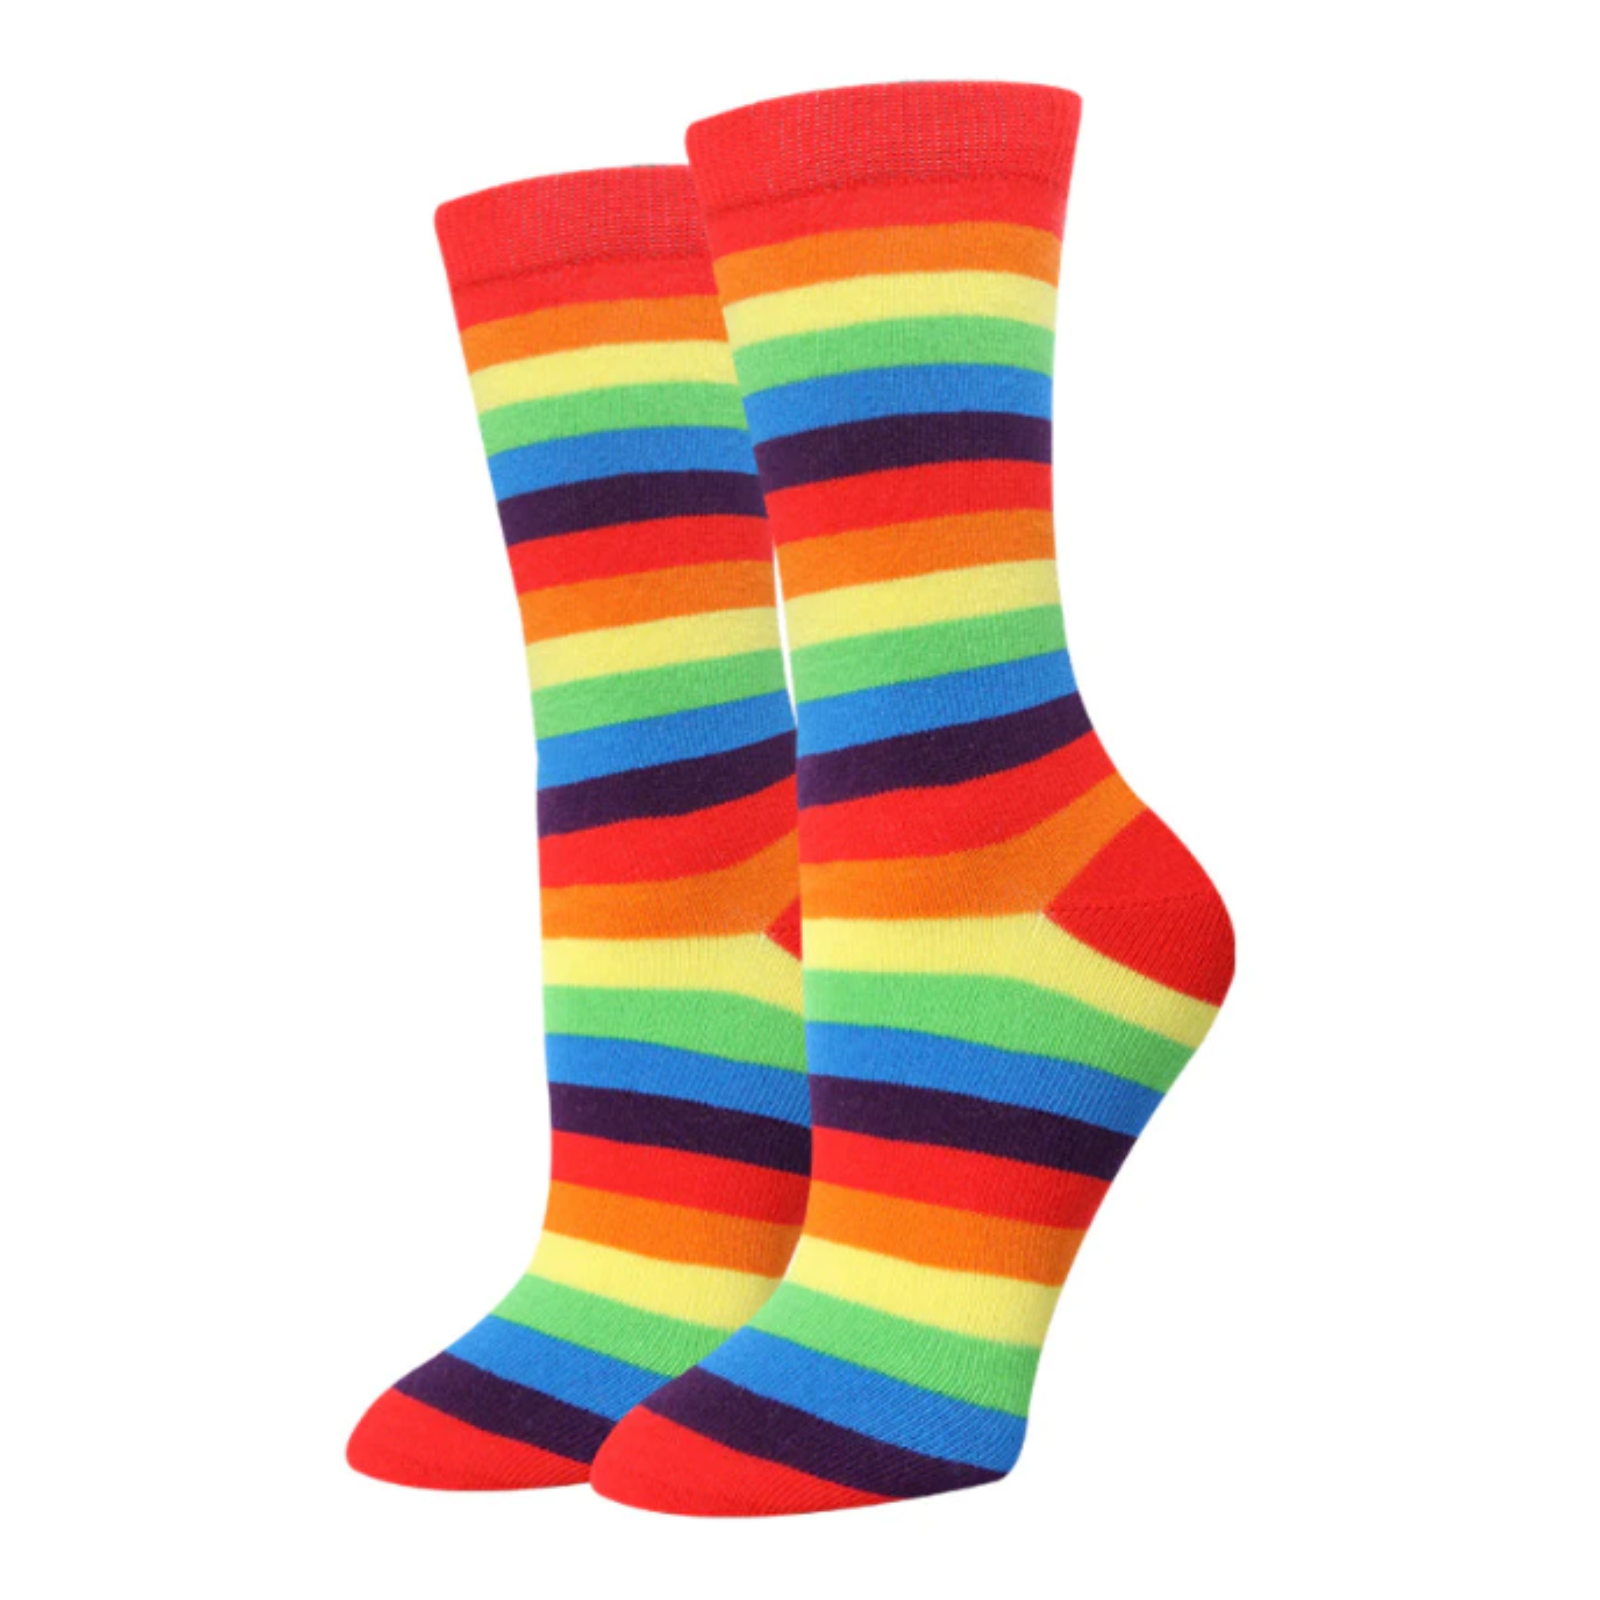 Sock Harbor Rainbow Stripe crew height women's sock featuring red cuff, toe, and heel 